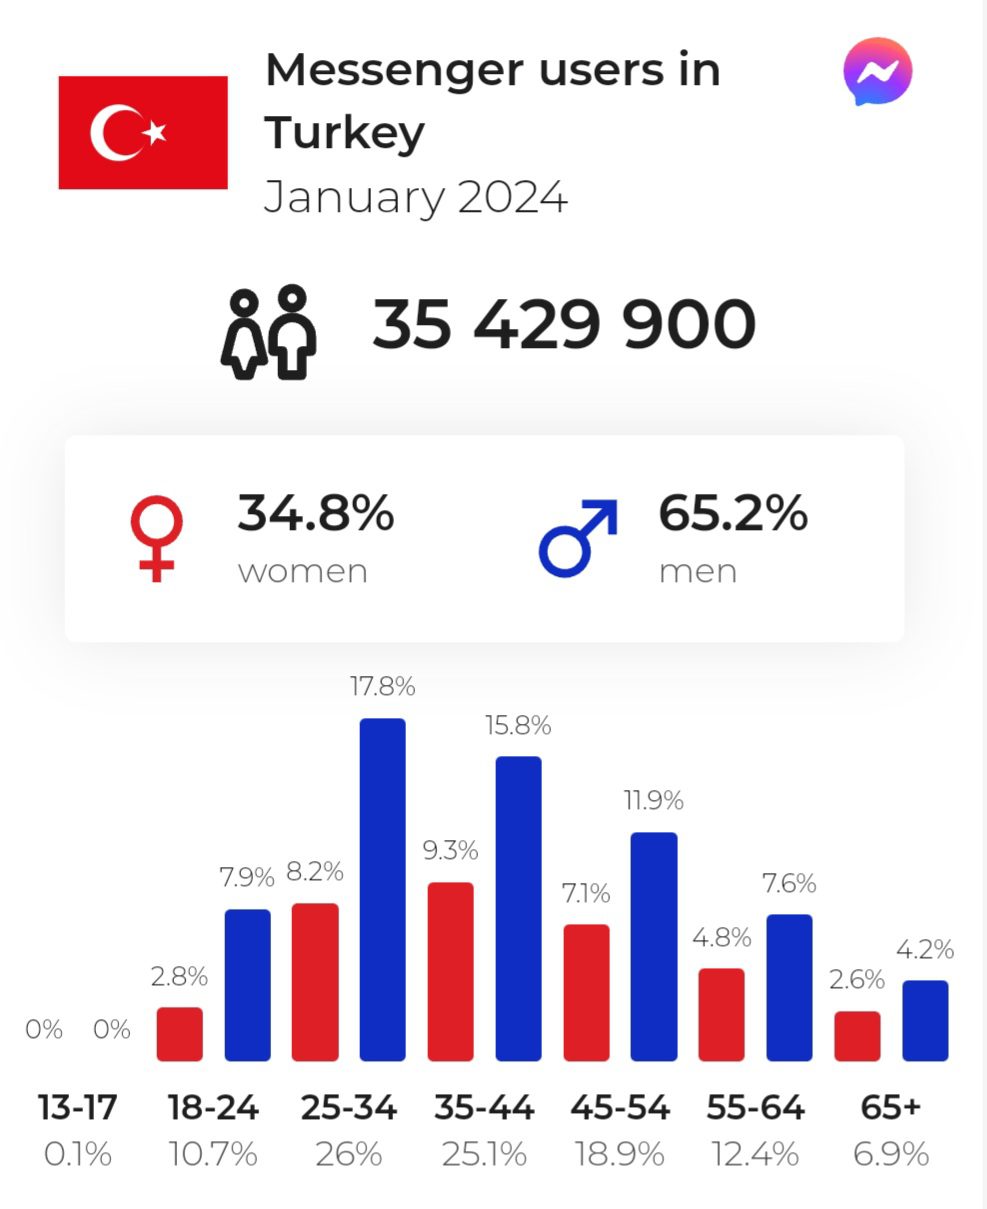 Messenger users in Turkey in 2024